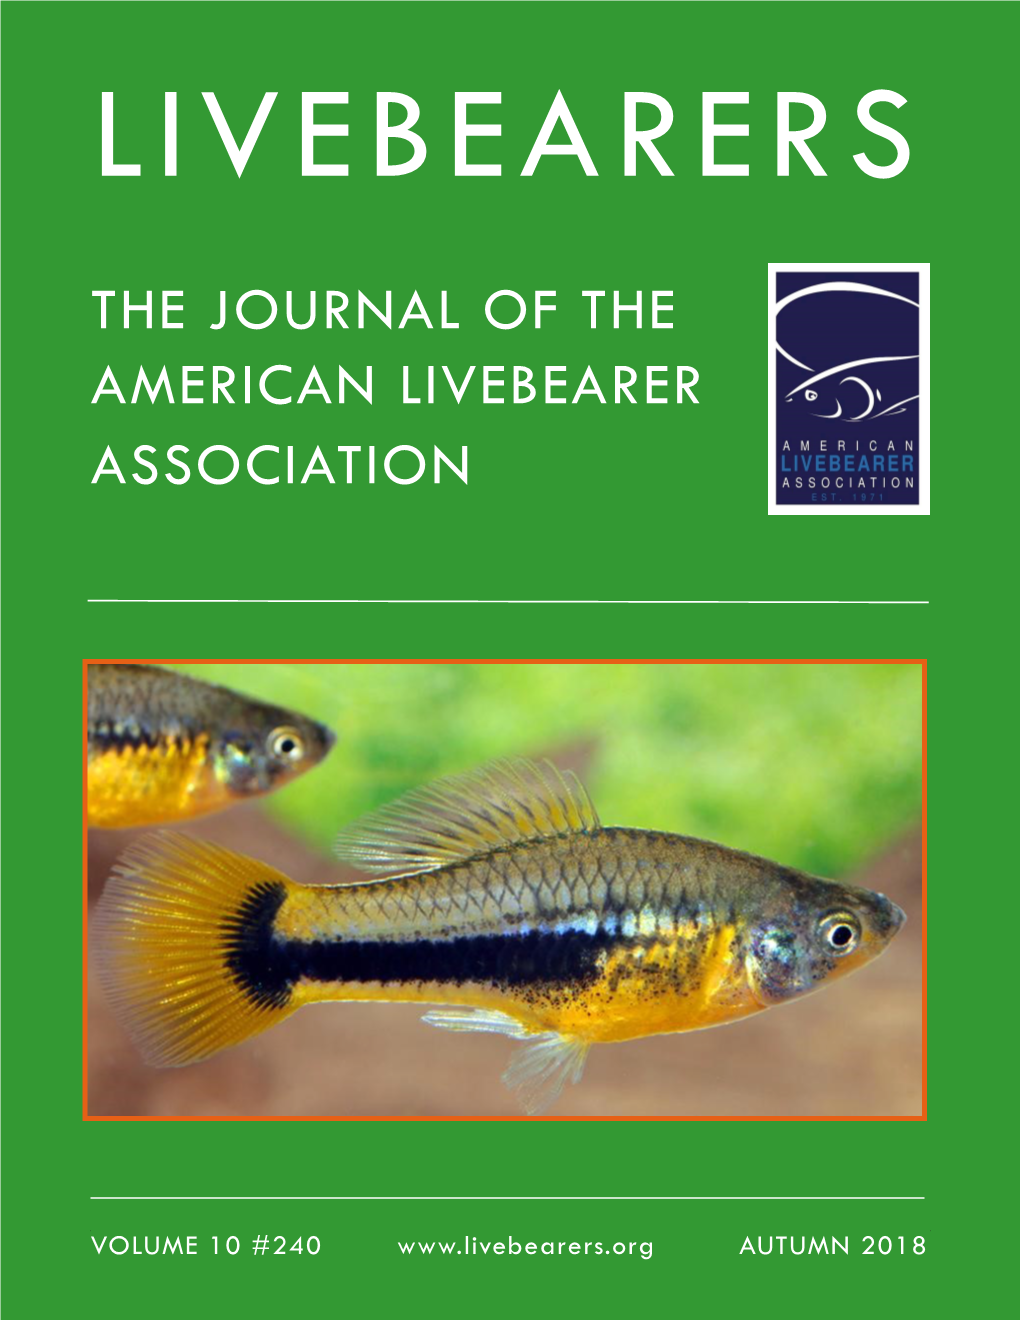 The Journal of the American Livebearer Association